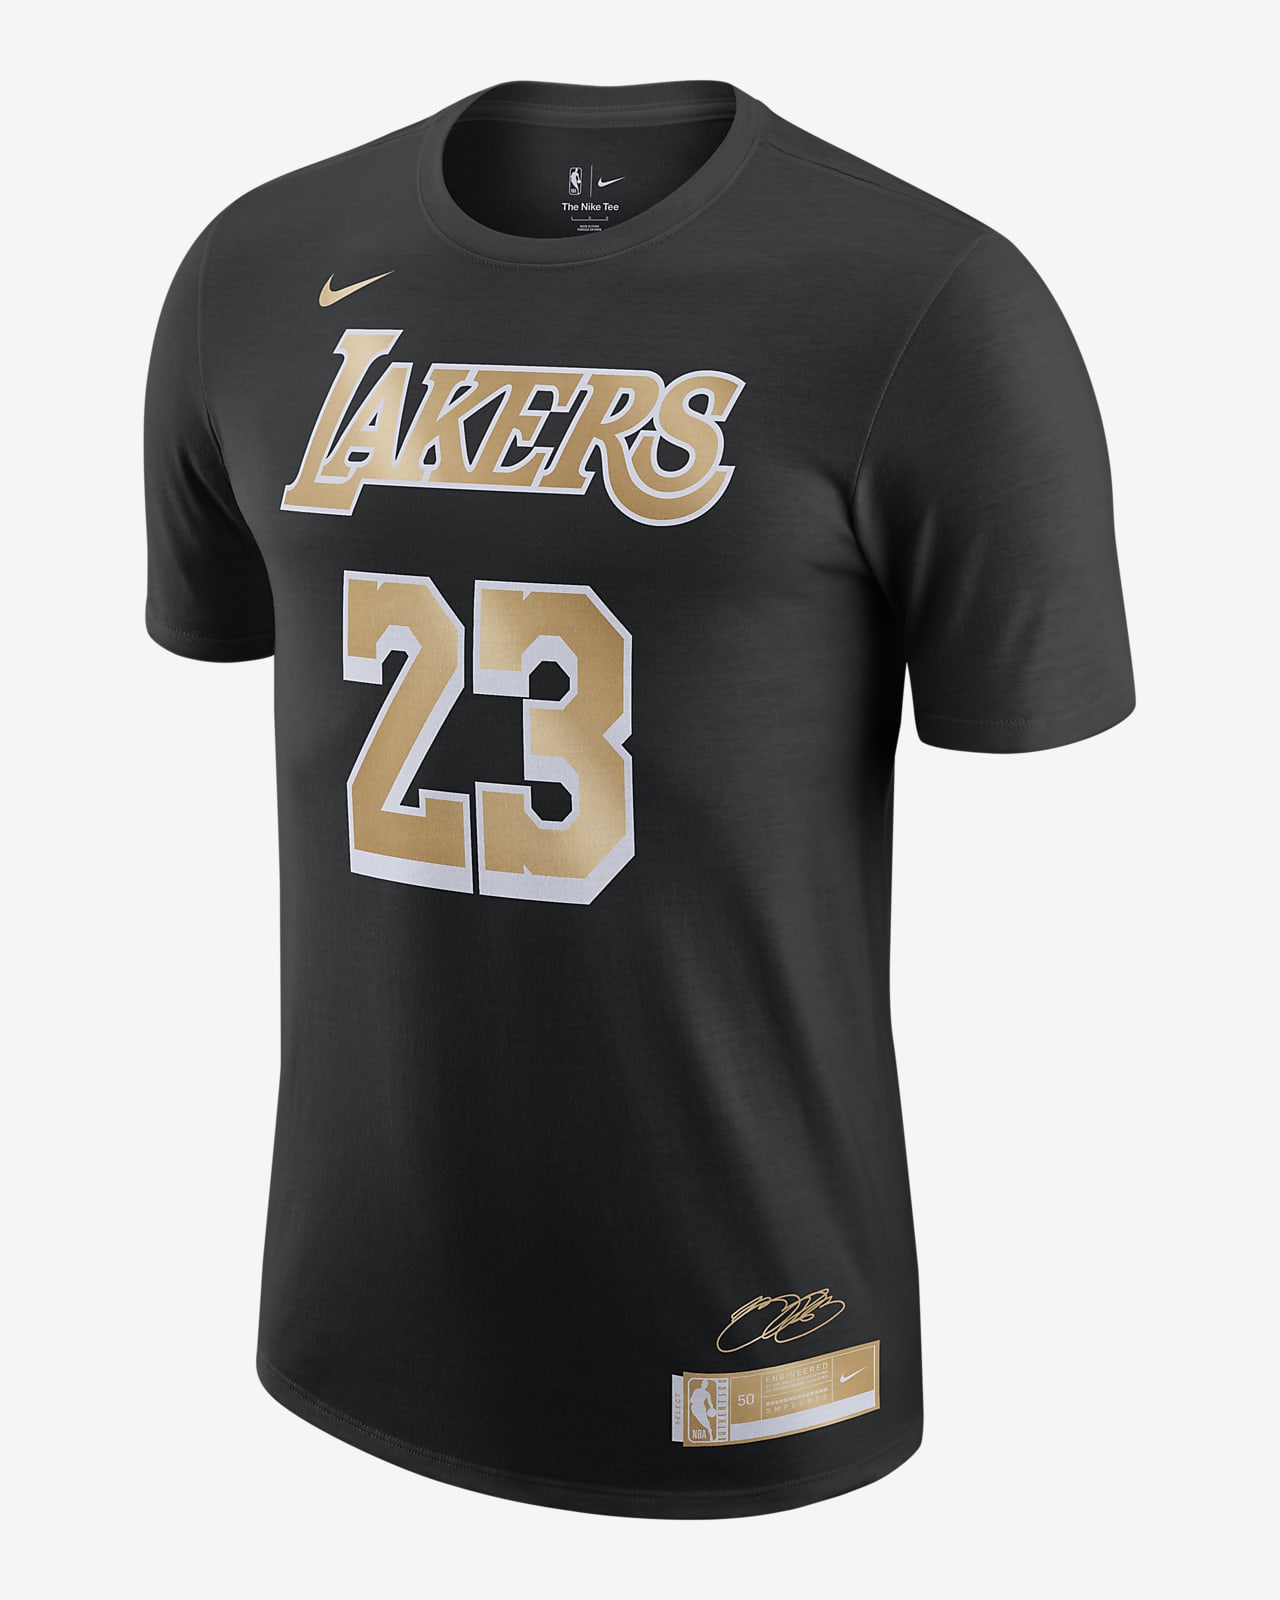 LeBron James Select Series Men's Nike NBA T-Shirt